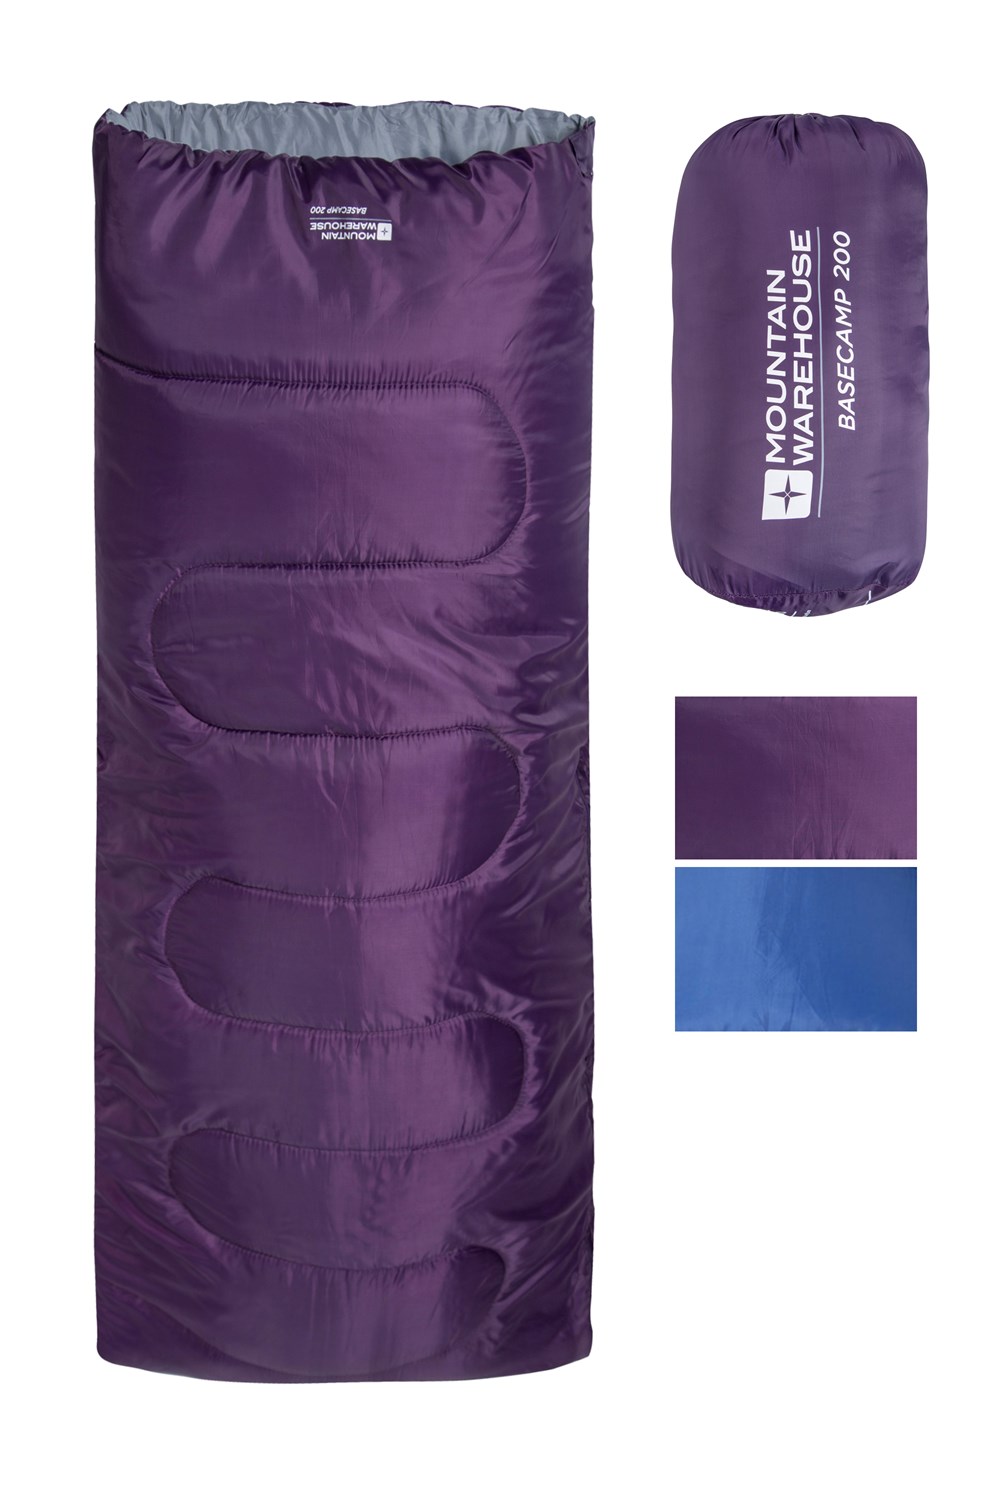 Lightweight-for Adults Khaki Mountain Warehouse Basecamp 200 Sleeping Bag 